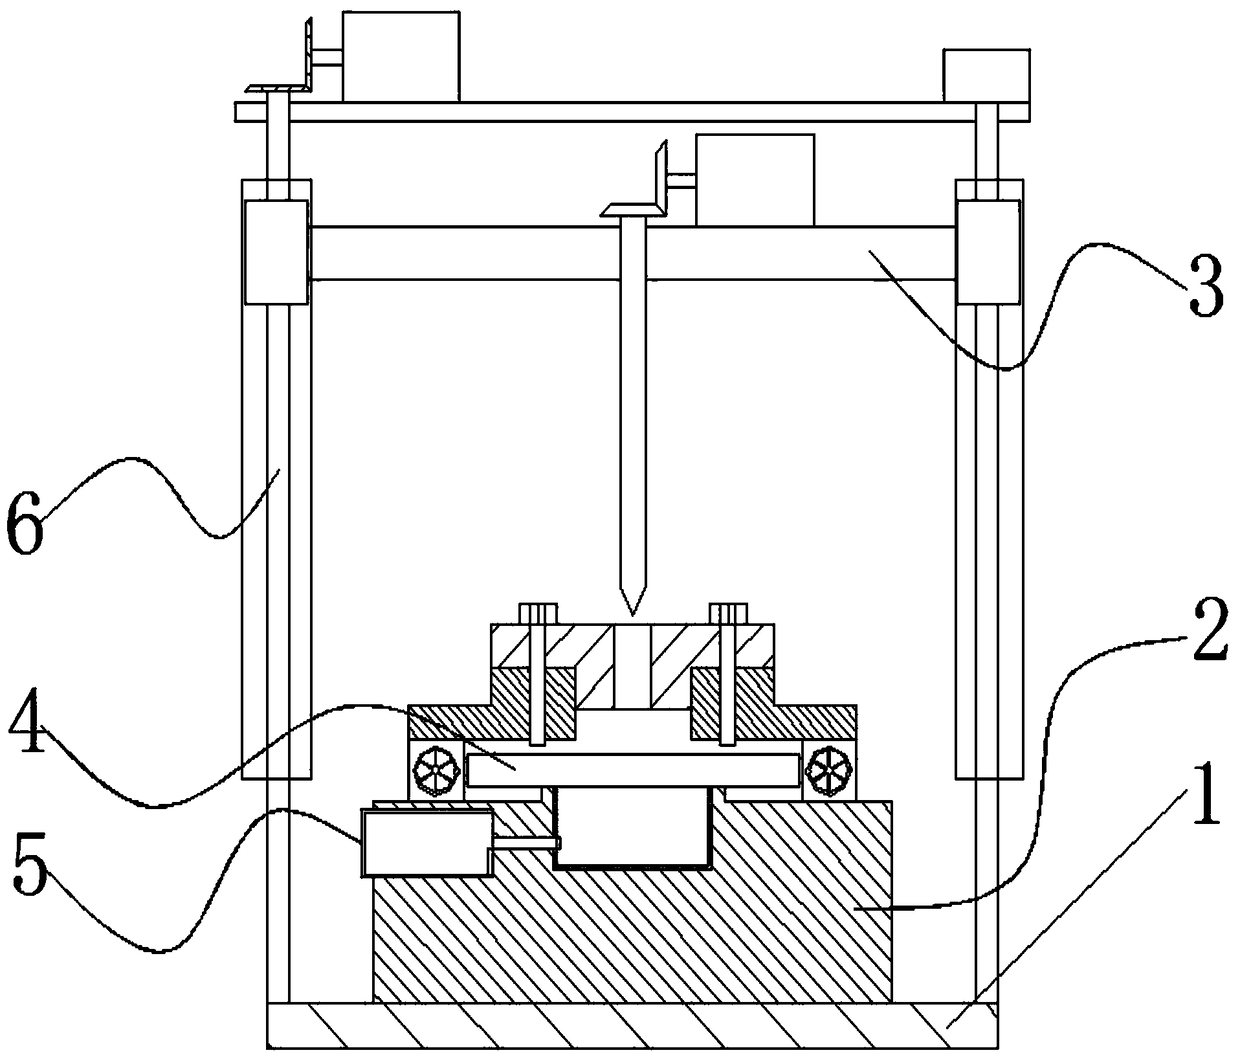 Graphite machining device